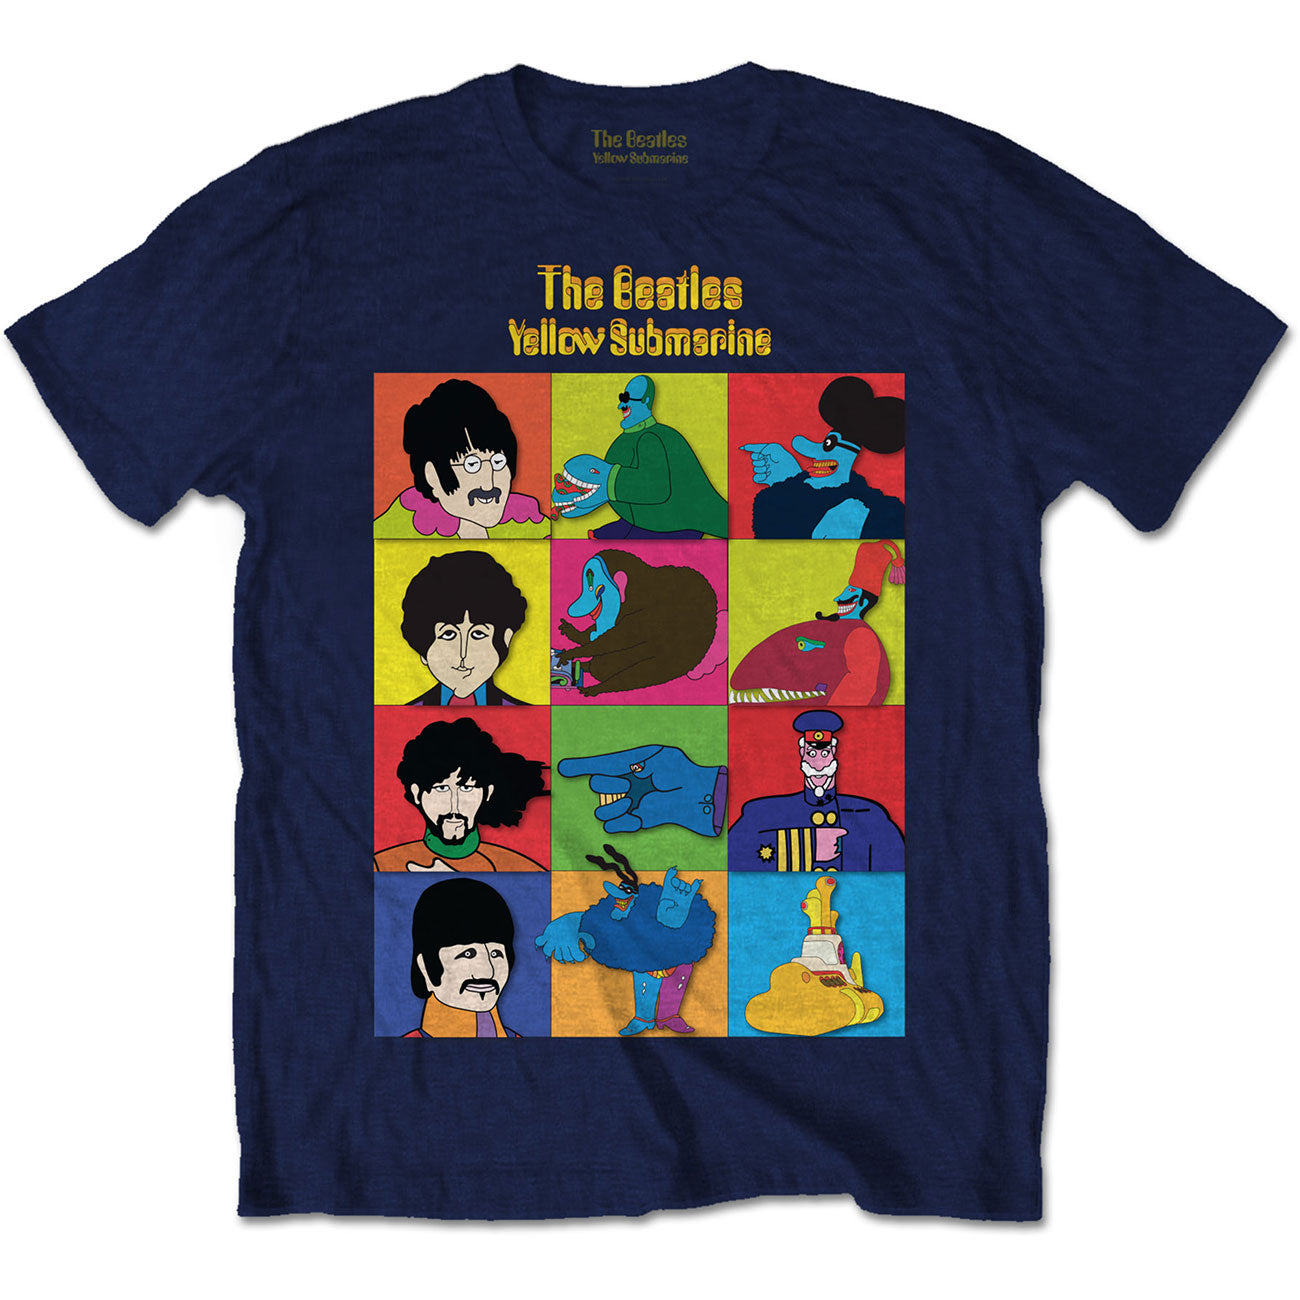 The Beatles T-Shirt: Yellow Submarine Characters